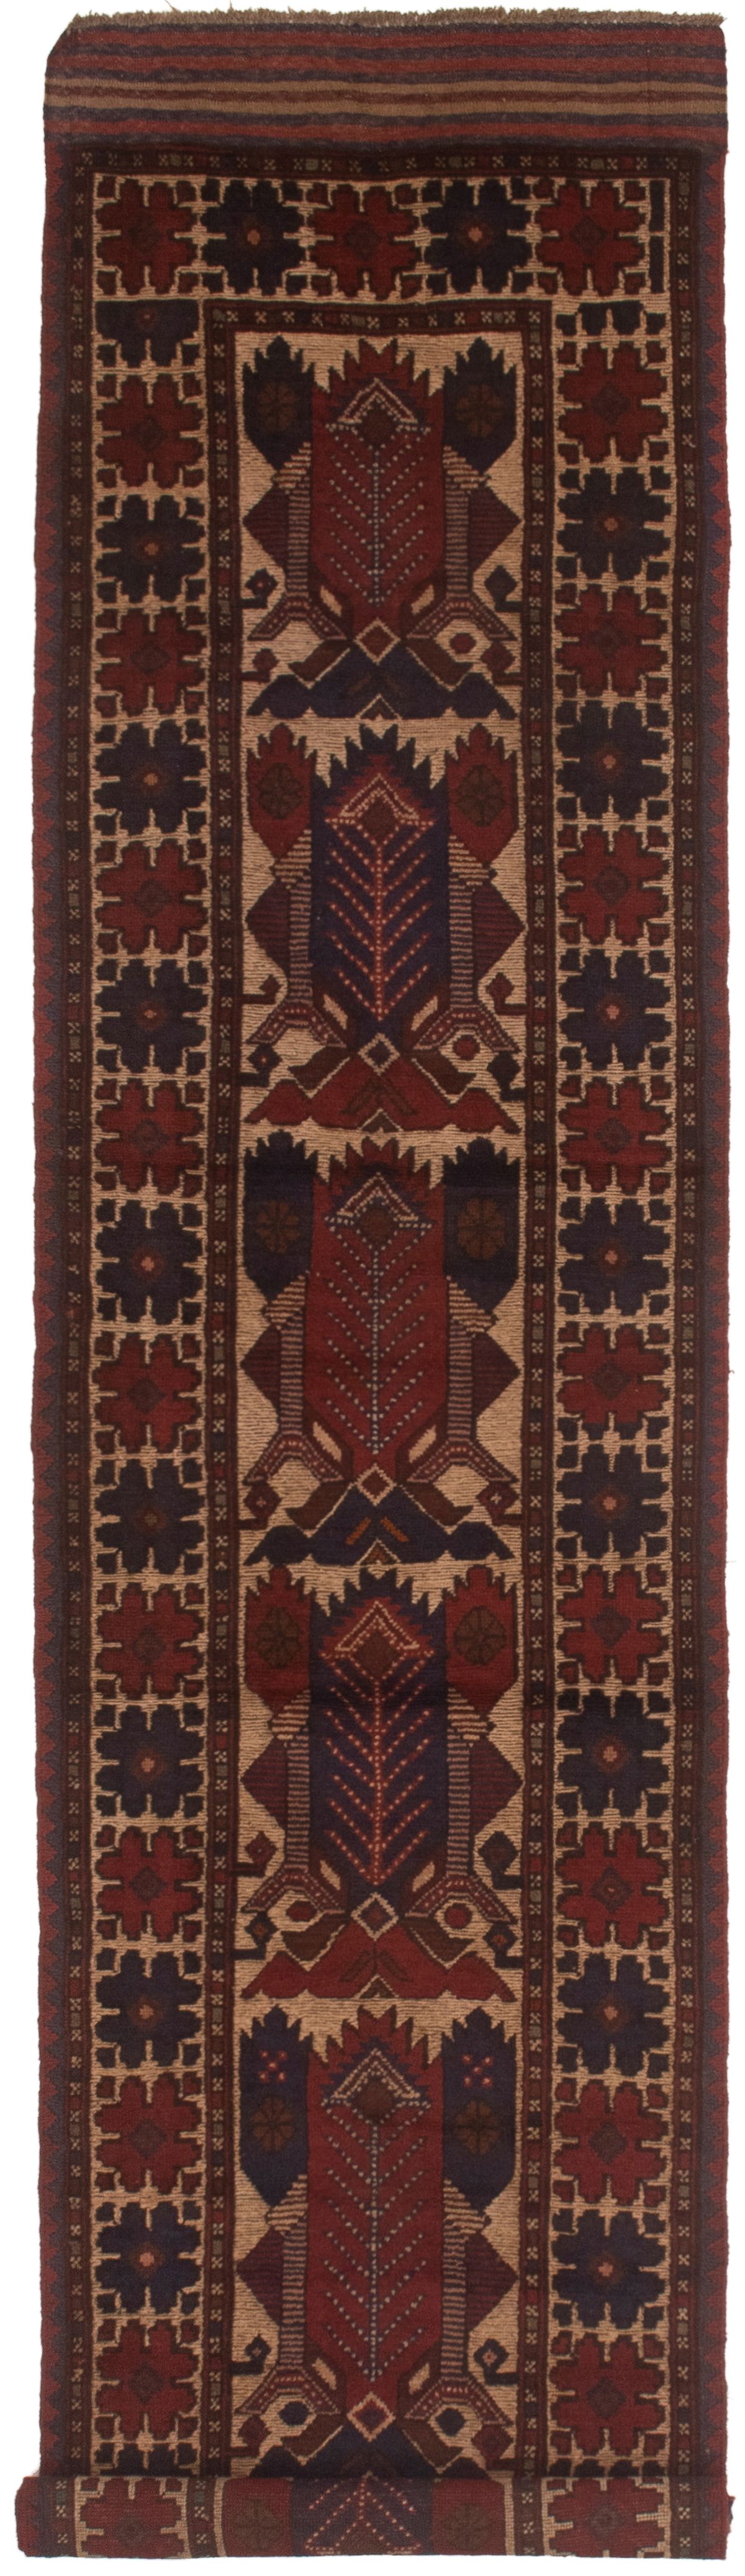 Hand-knotted Tajik Caucasian Dark Navy, Red Wool Rug 2'7" x 12'4" Size: 2'7" x 12'4"  